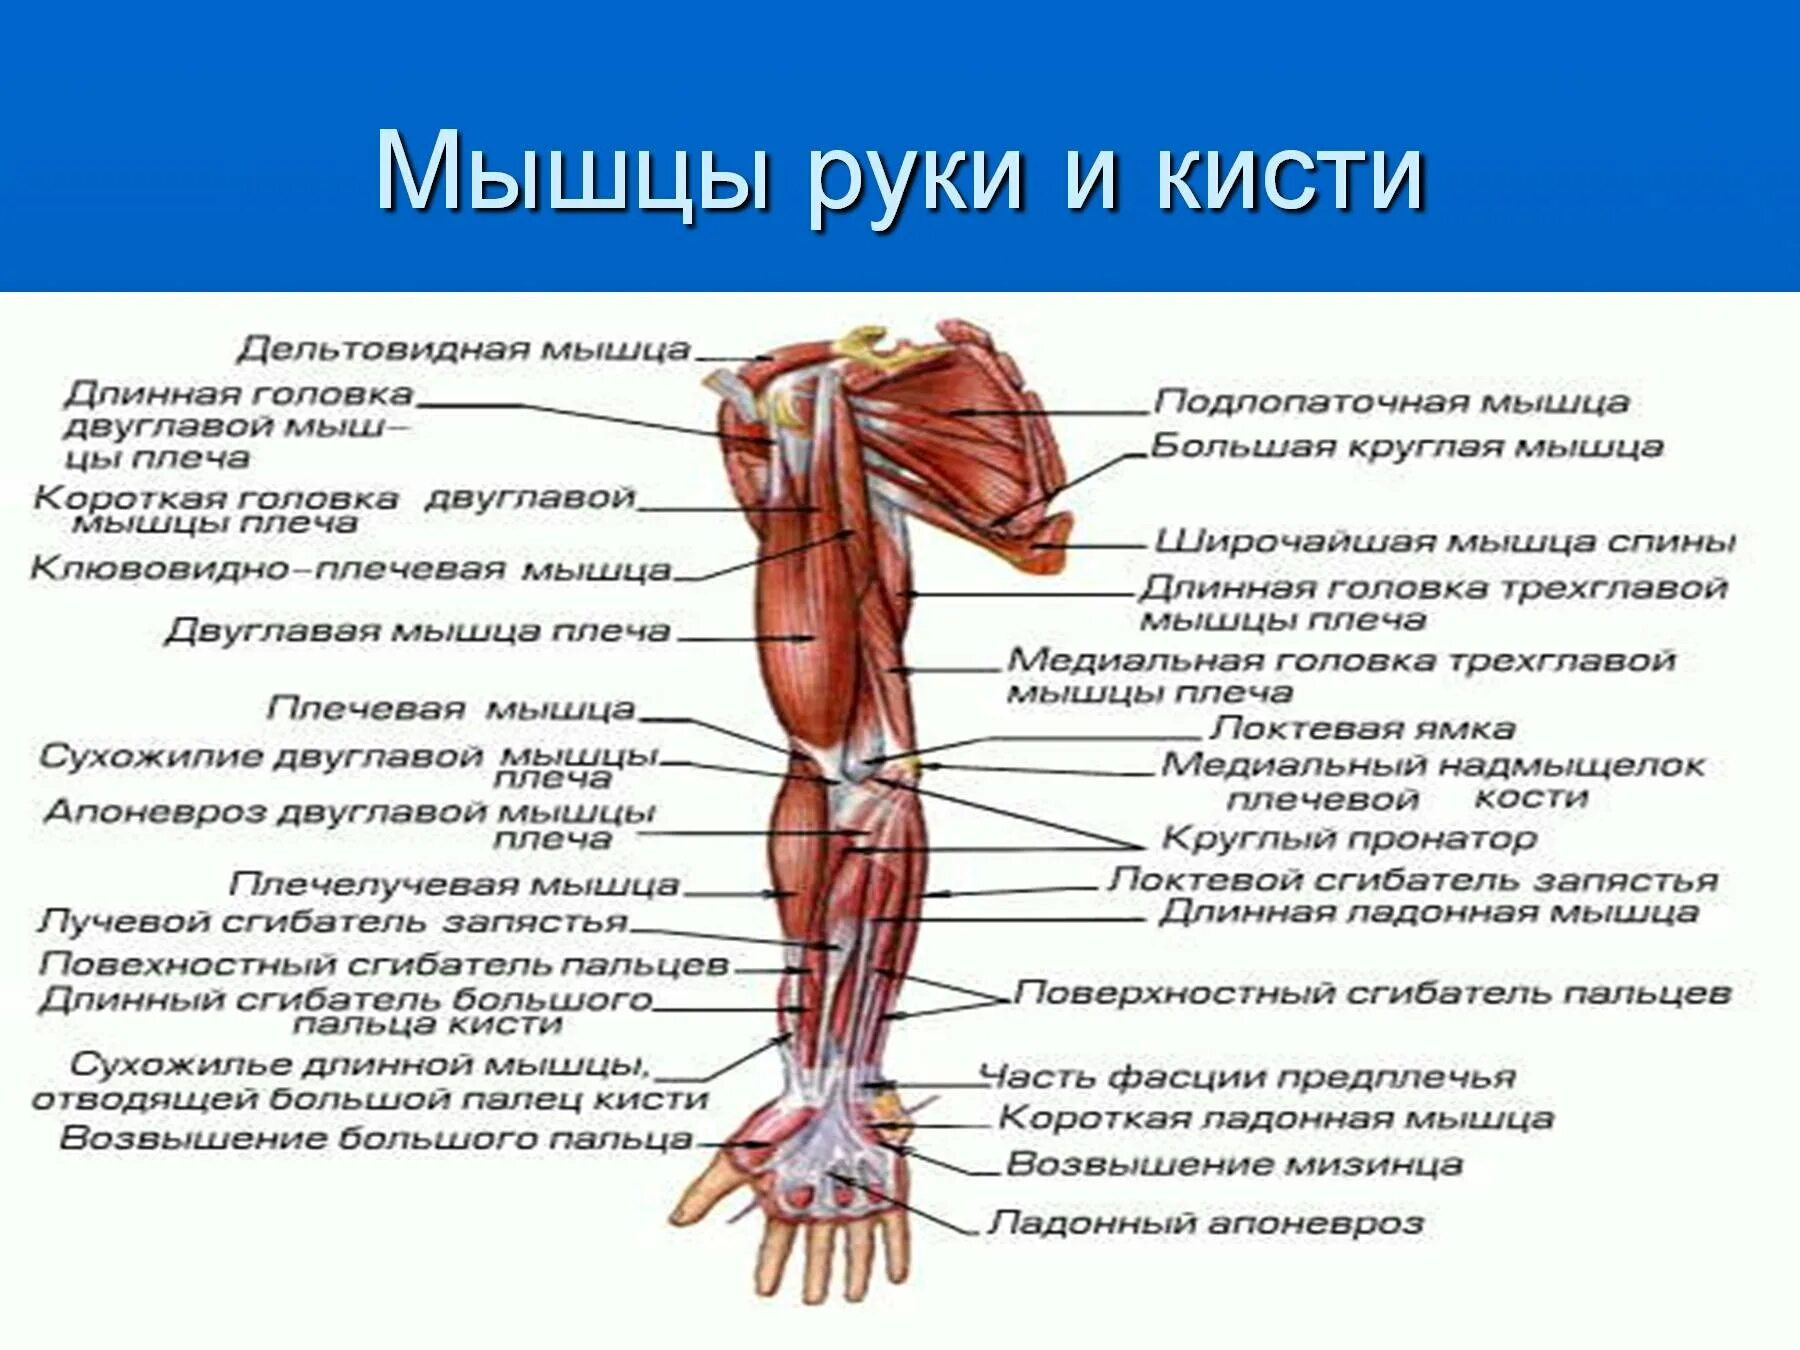 Мышцы руки анатомия человека. Мышца руки: название мышц, функция. Мышцы руки и плеча схема. Мужци рук. Рука человека название